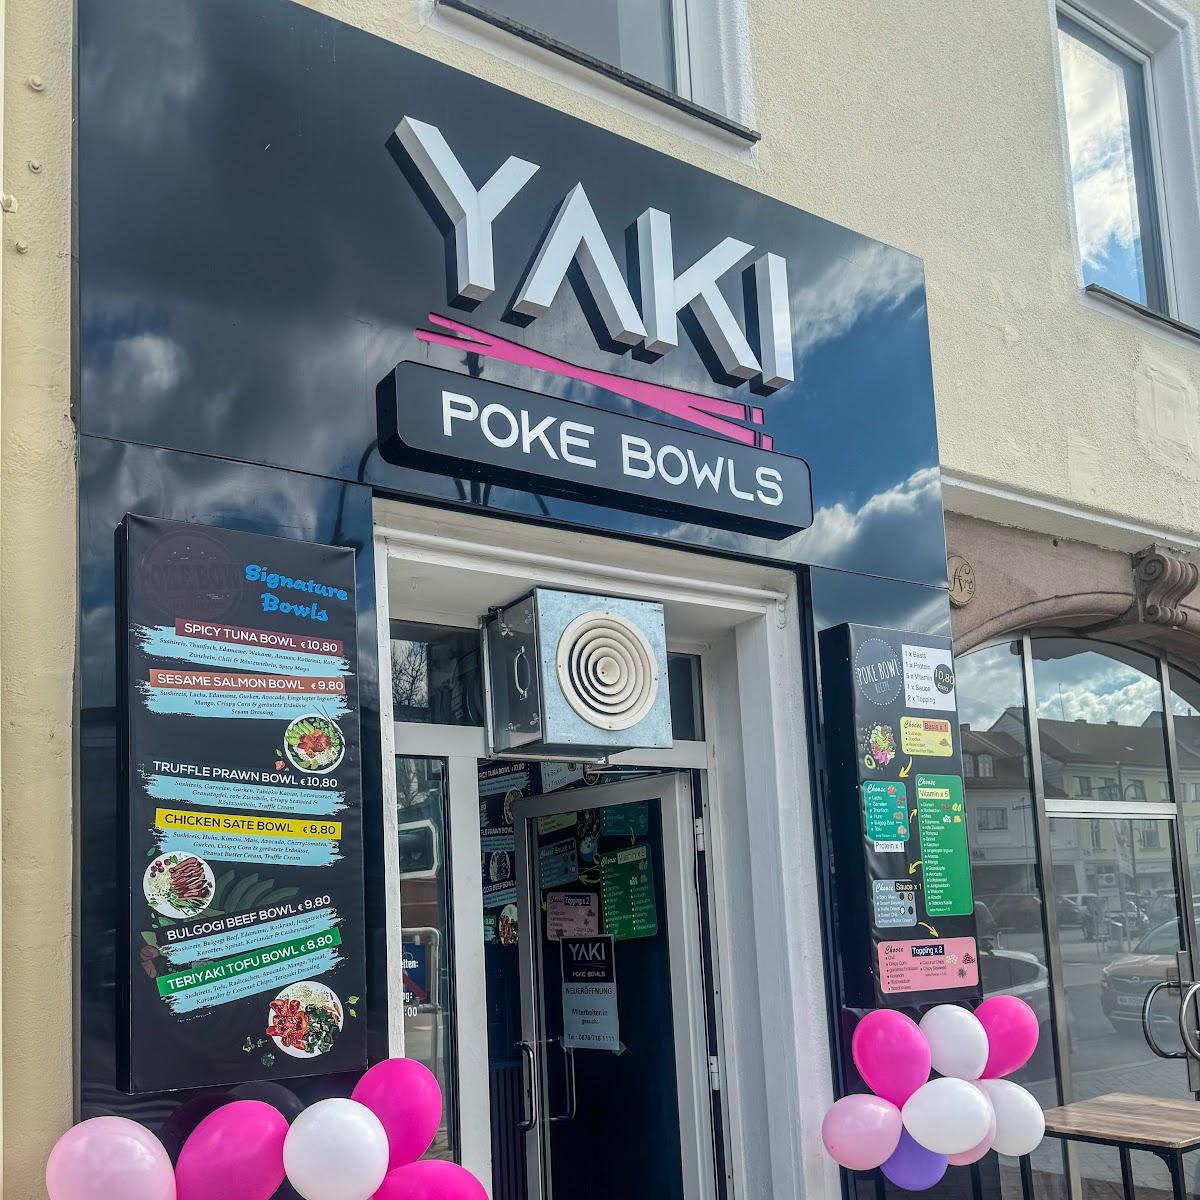 Restaurant "Yaki Bowl" in Mistelbach